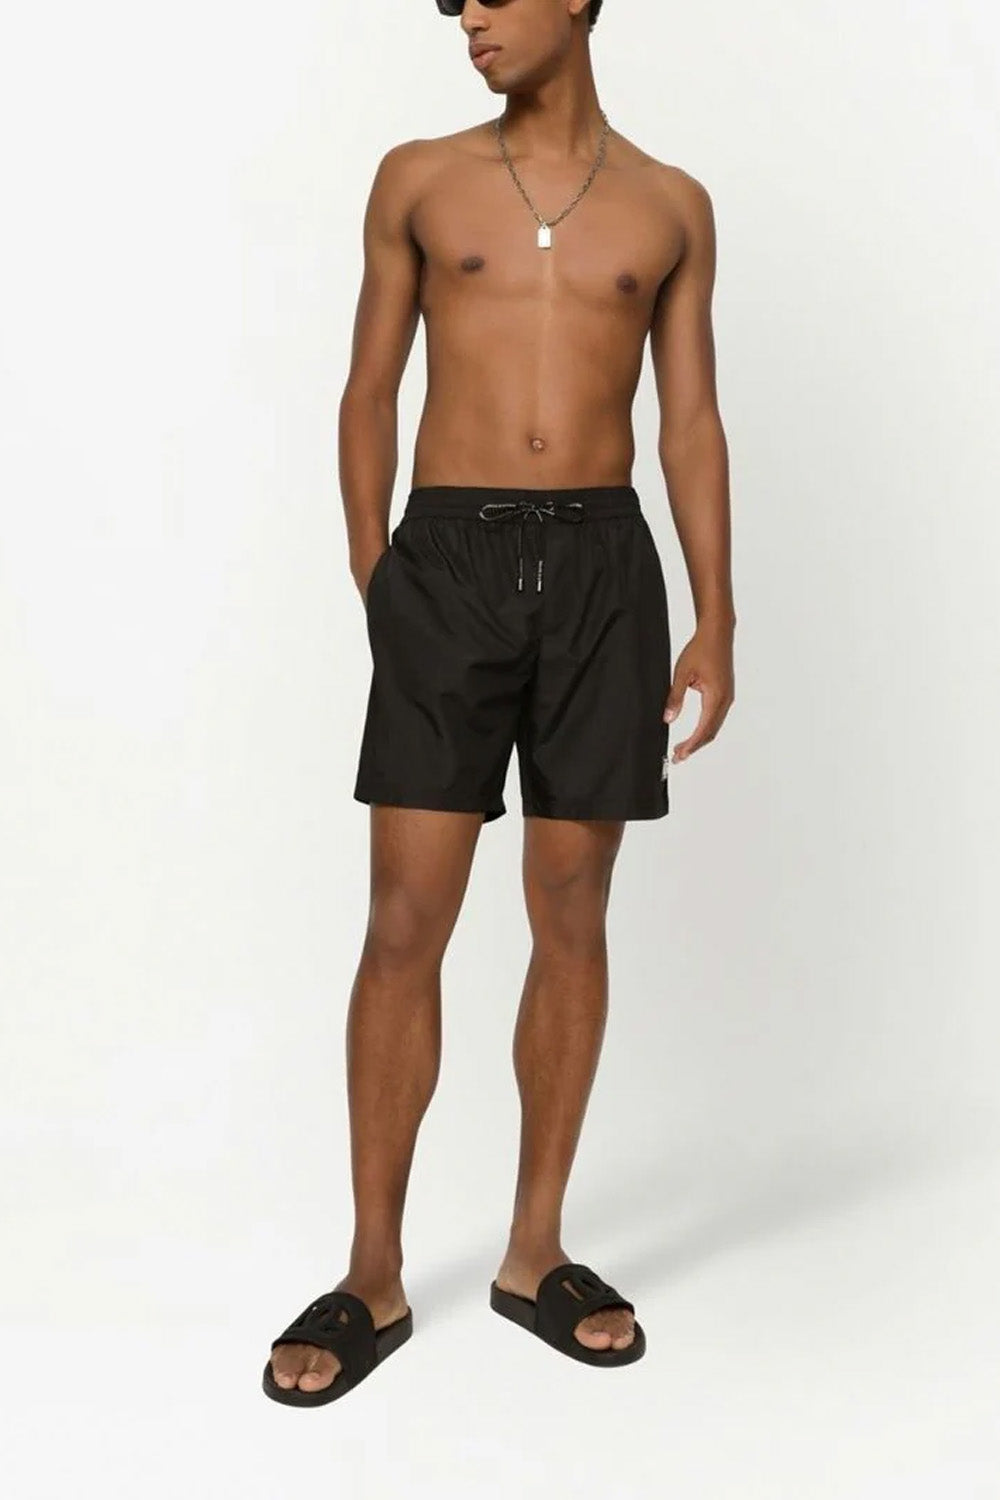 Dolce & Gabbana DG Essentials logo-plaque swim shorts